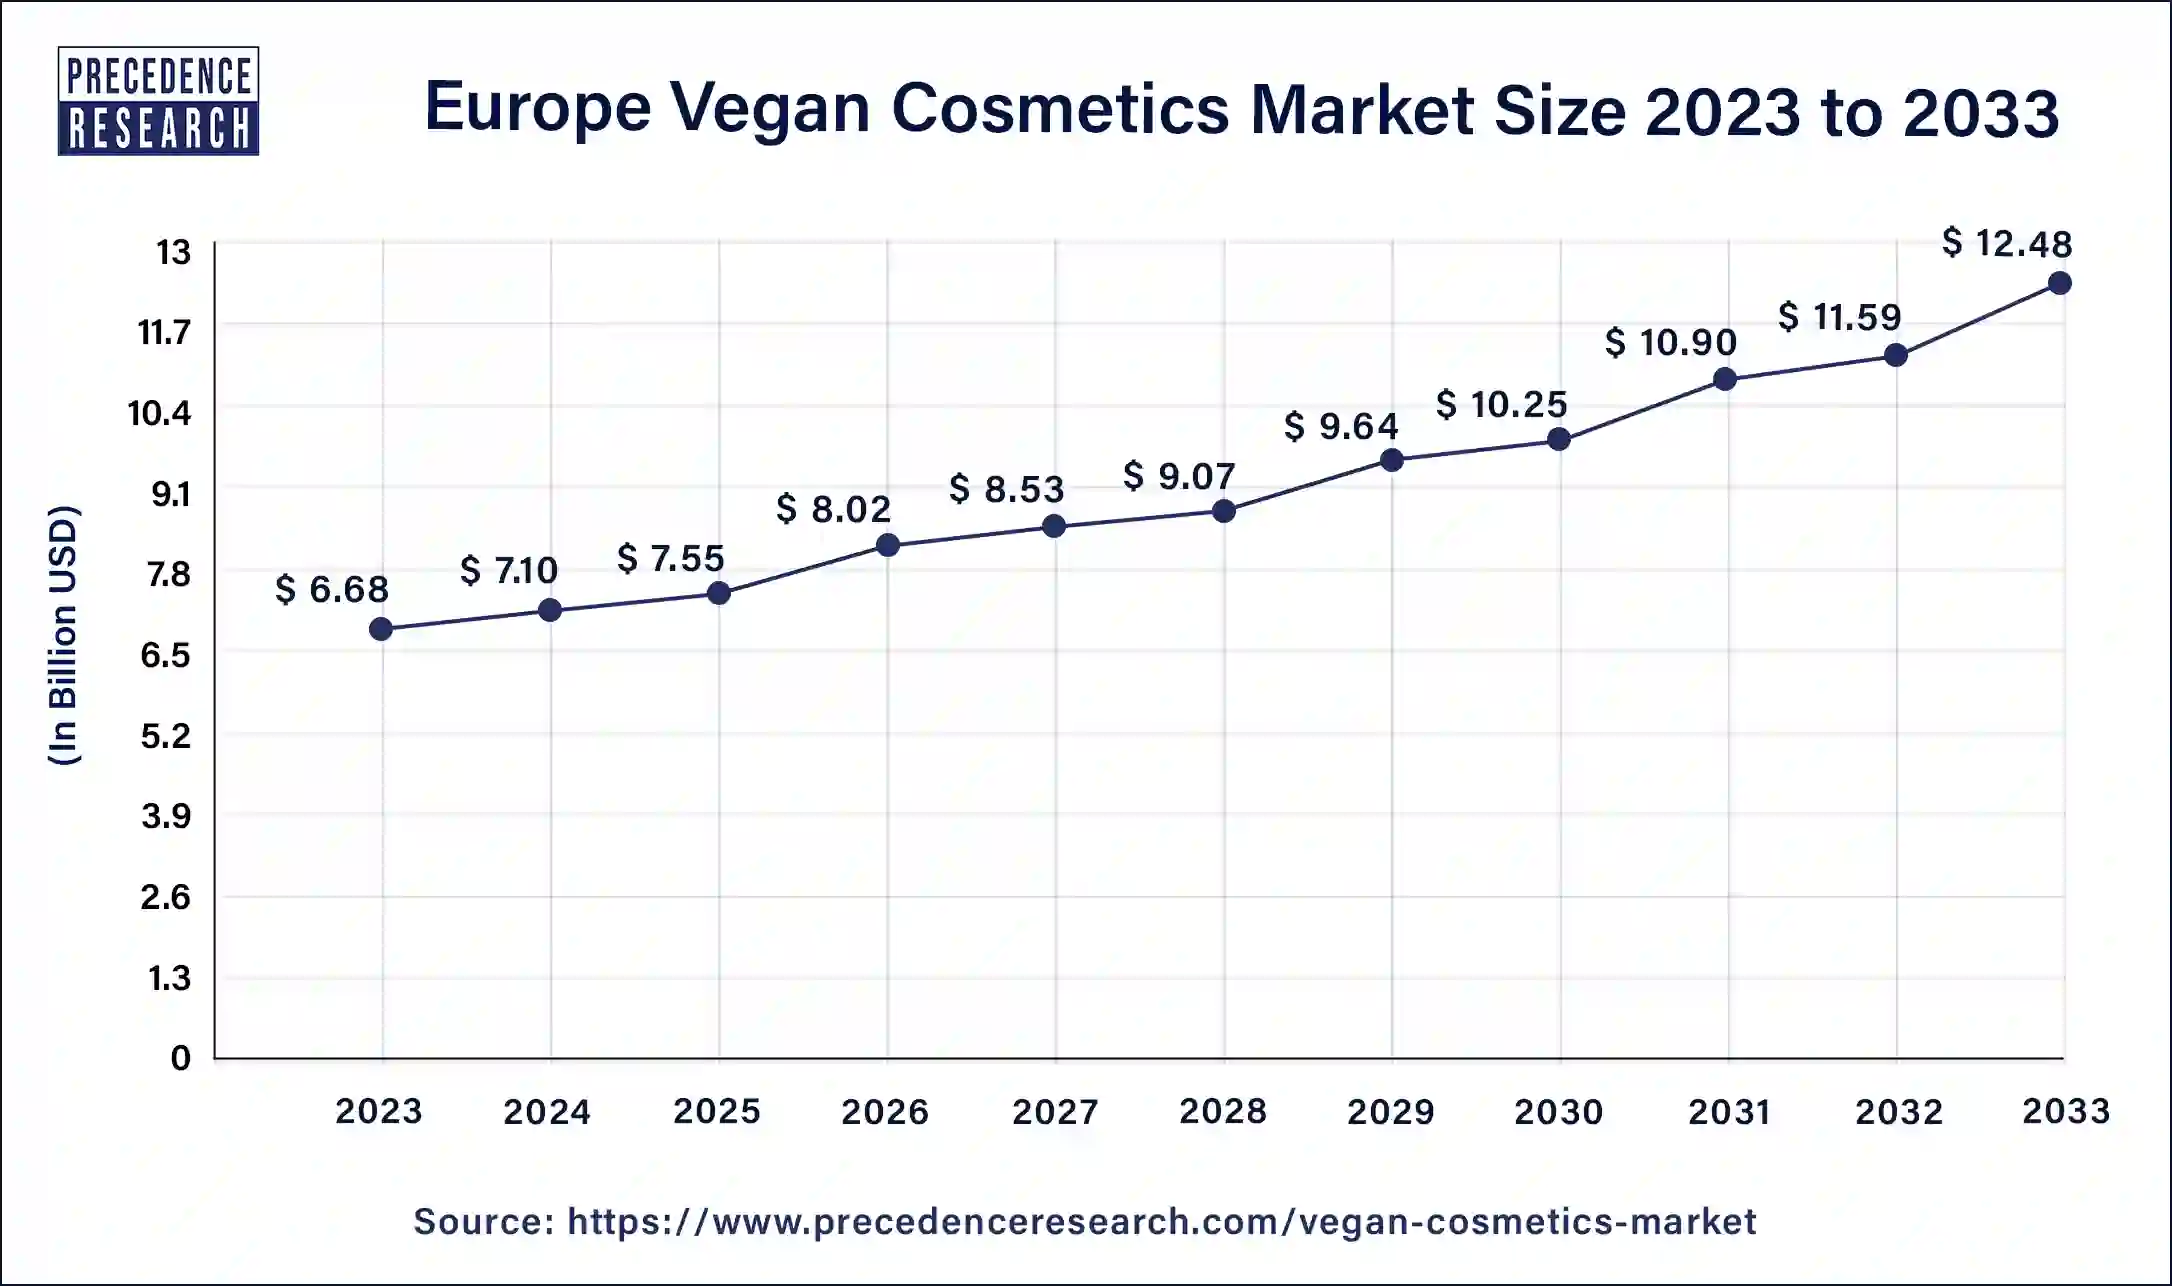 Europe Vegan Cosmetics Market Size 2024 to 2033